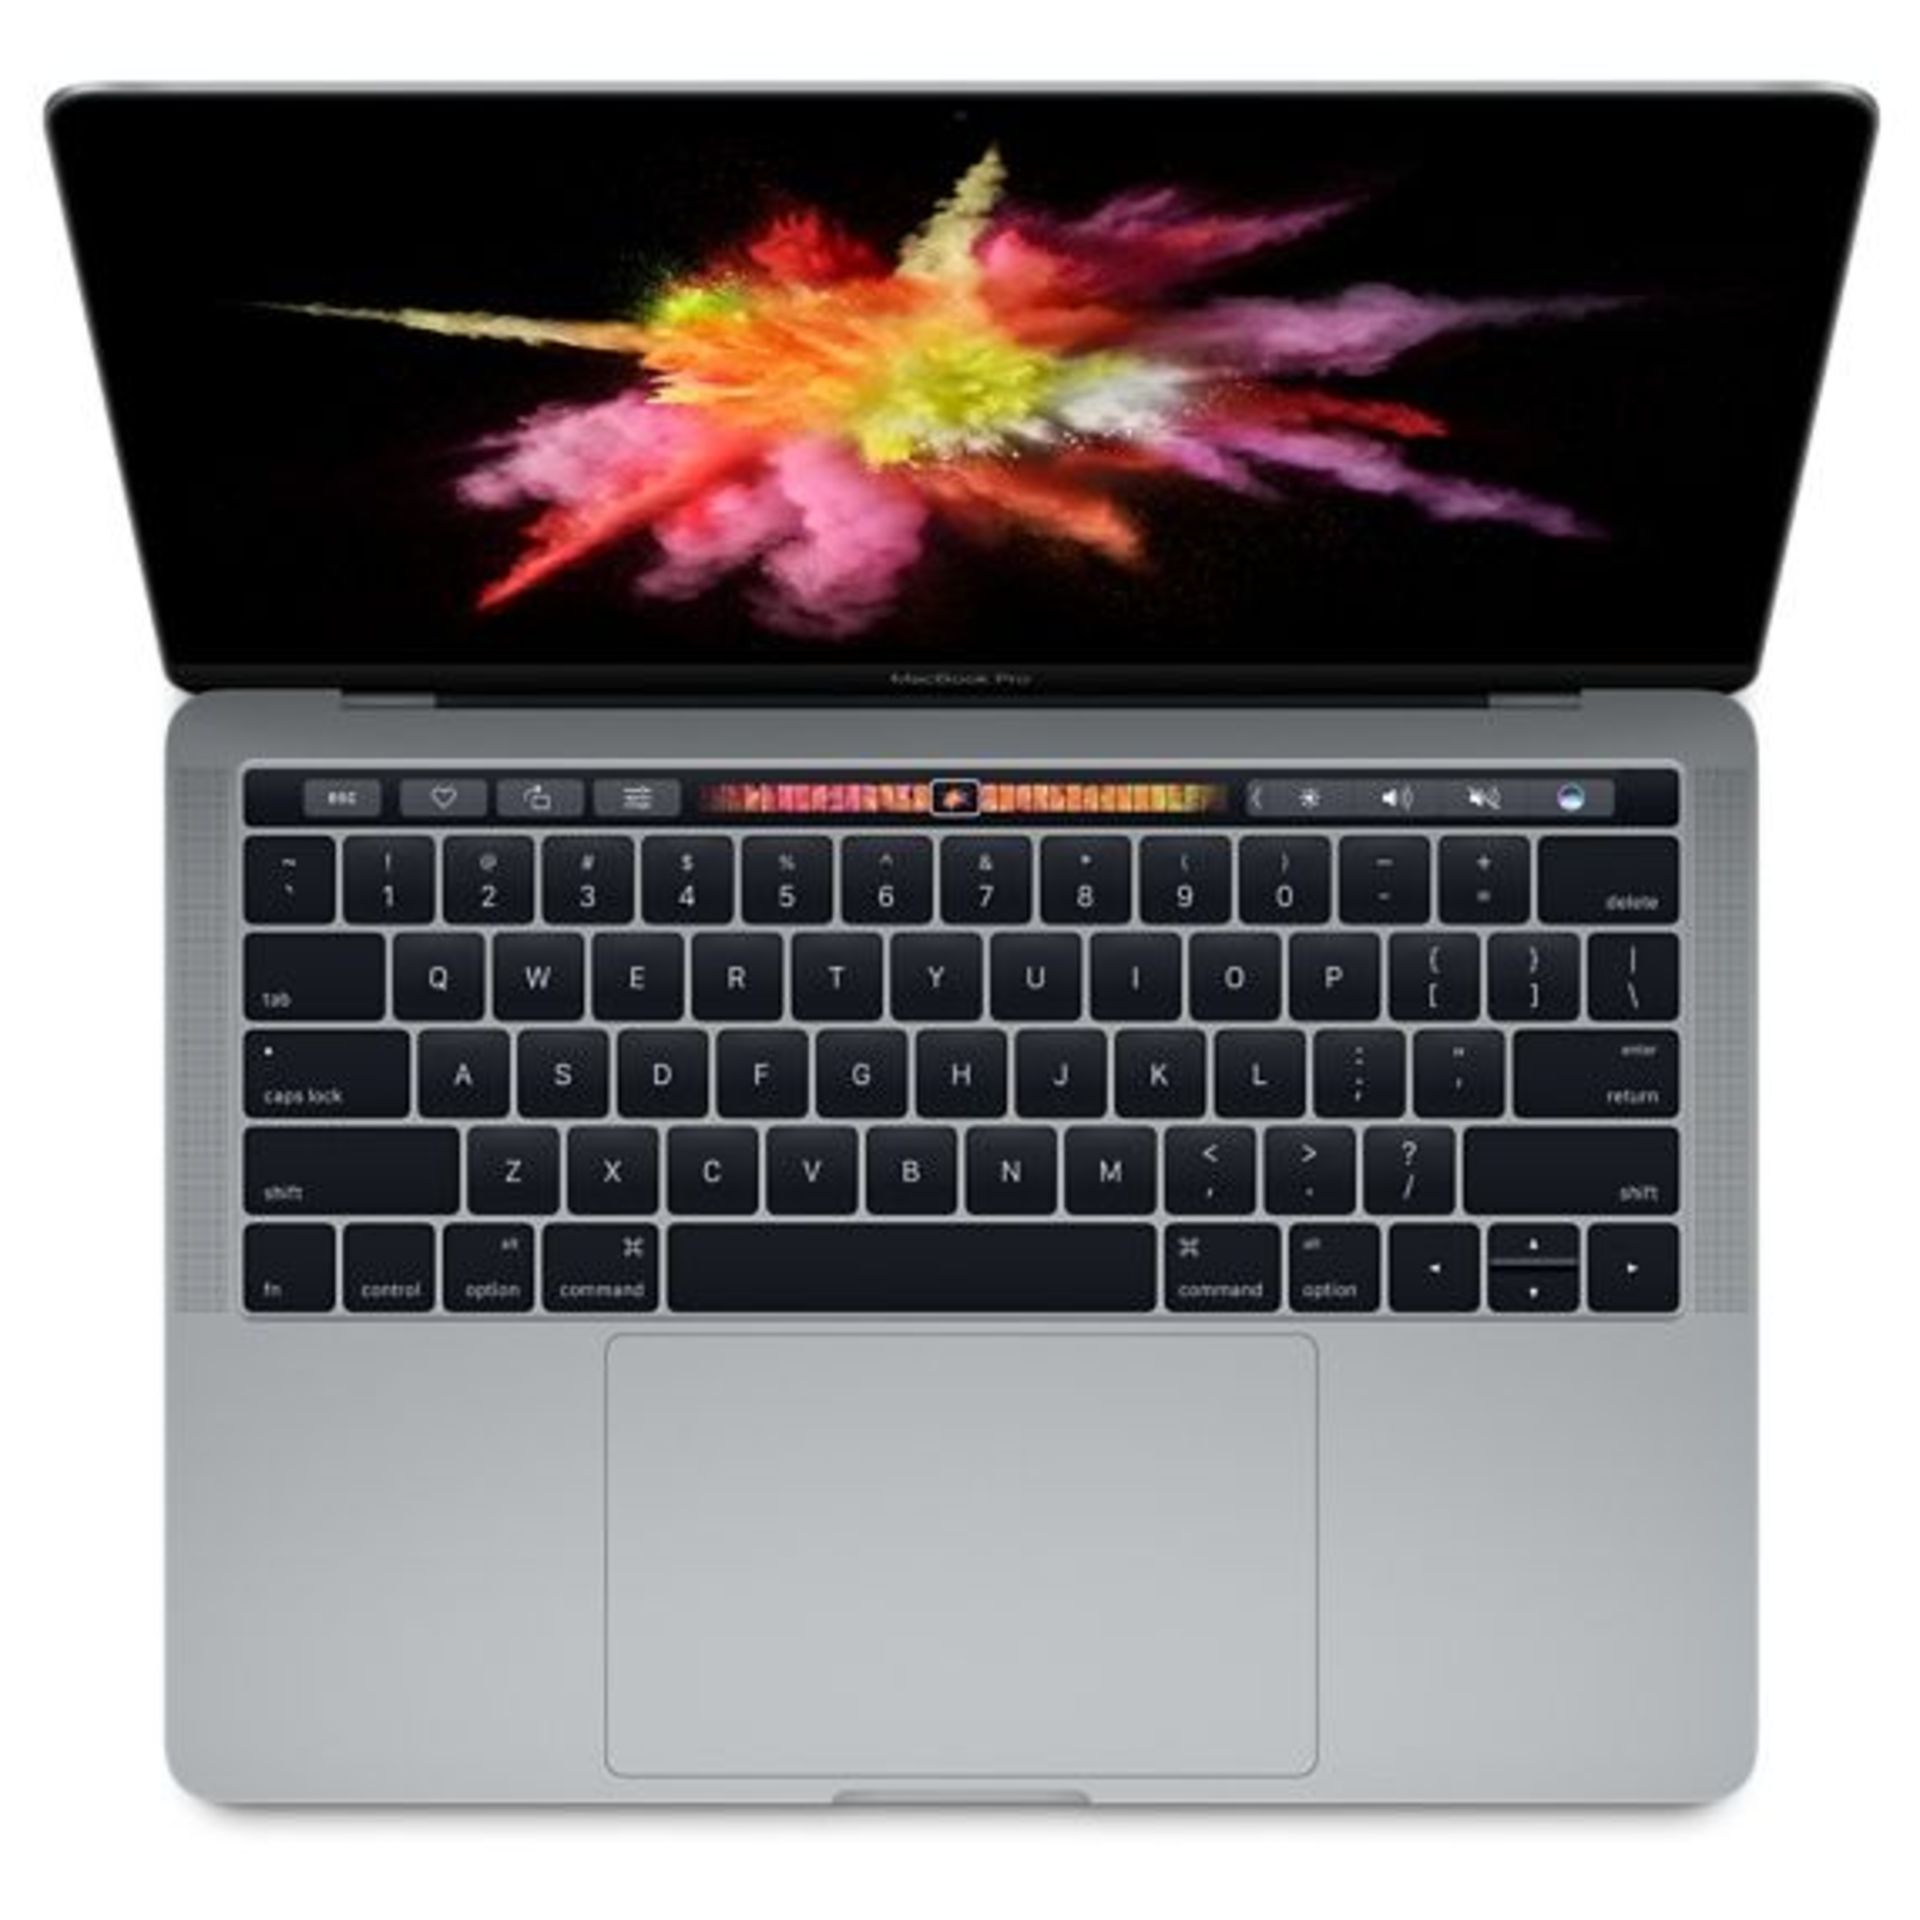 Apple MacBook Pro 13” Touchbar Monterey Core i5-6267U 8GB DDR3 256GB SSD Webcam OffIce